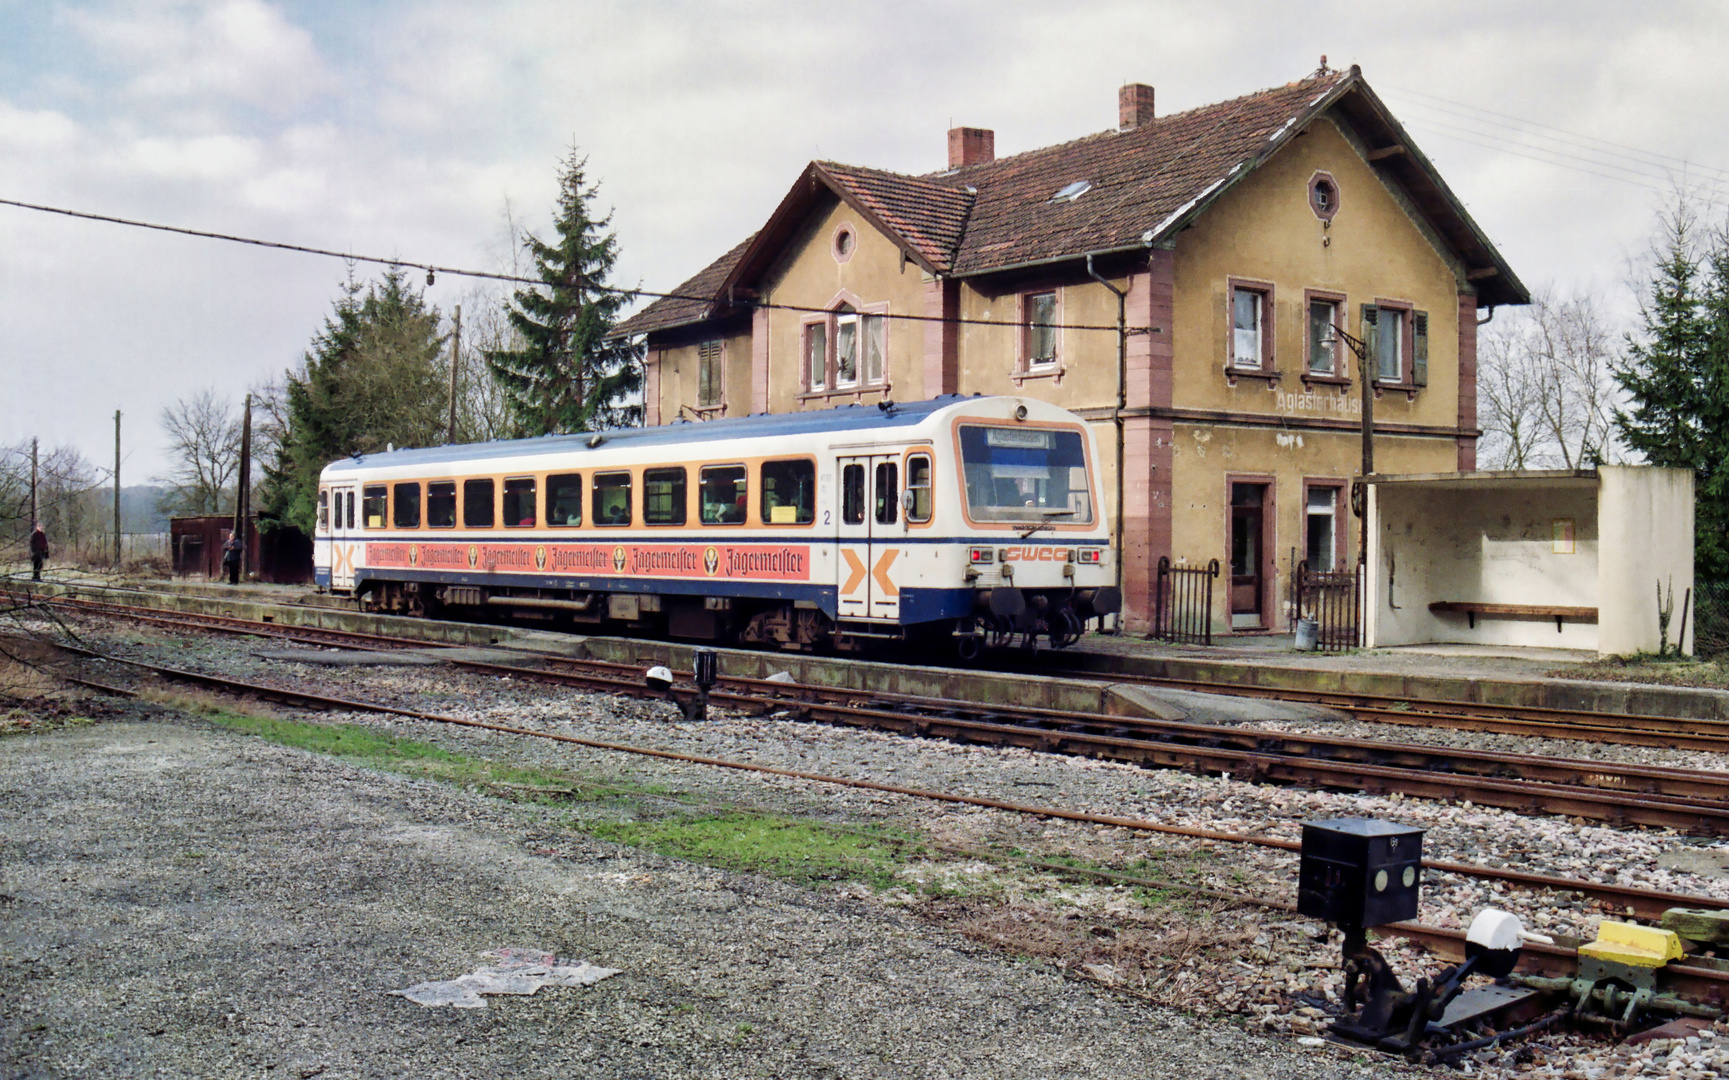 NE 81-Triebwagen in Aglasterhausen